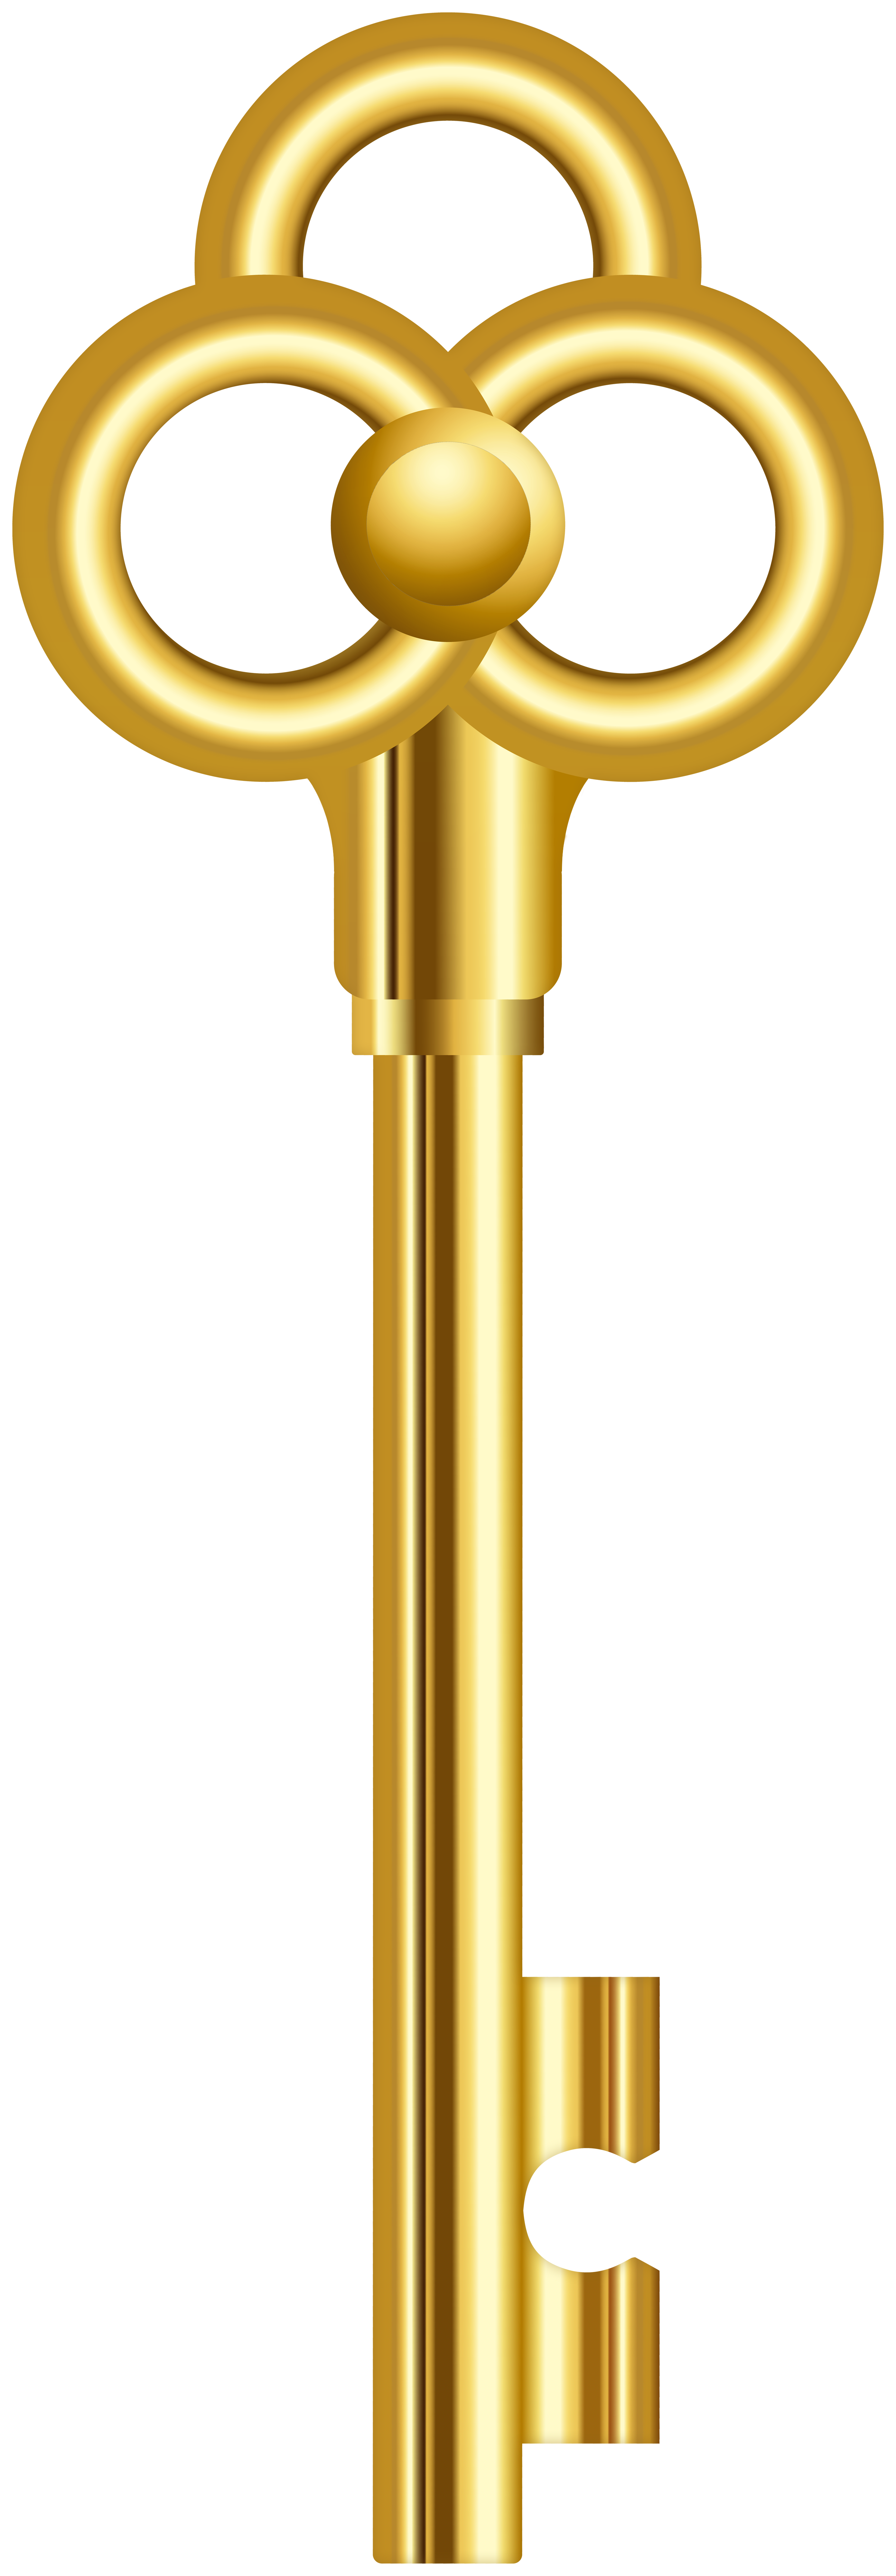 Ключ картинка. Золотой ключ. Изображение ключа. Золотистый ключ. Ключ Буратино.